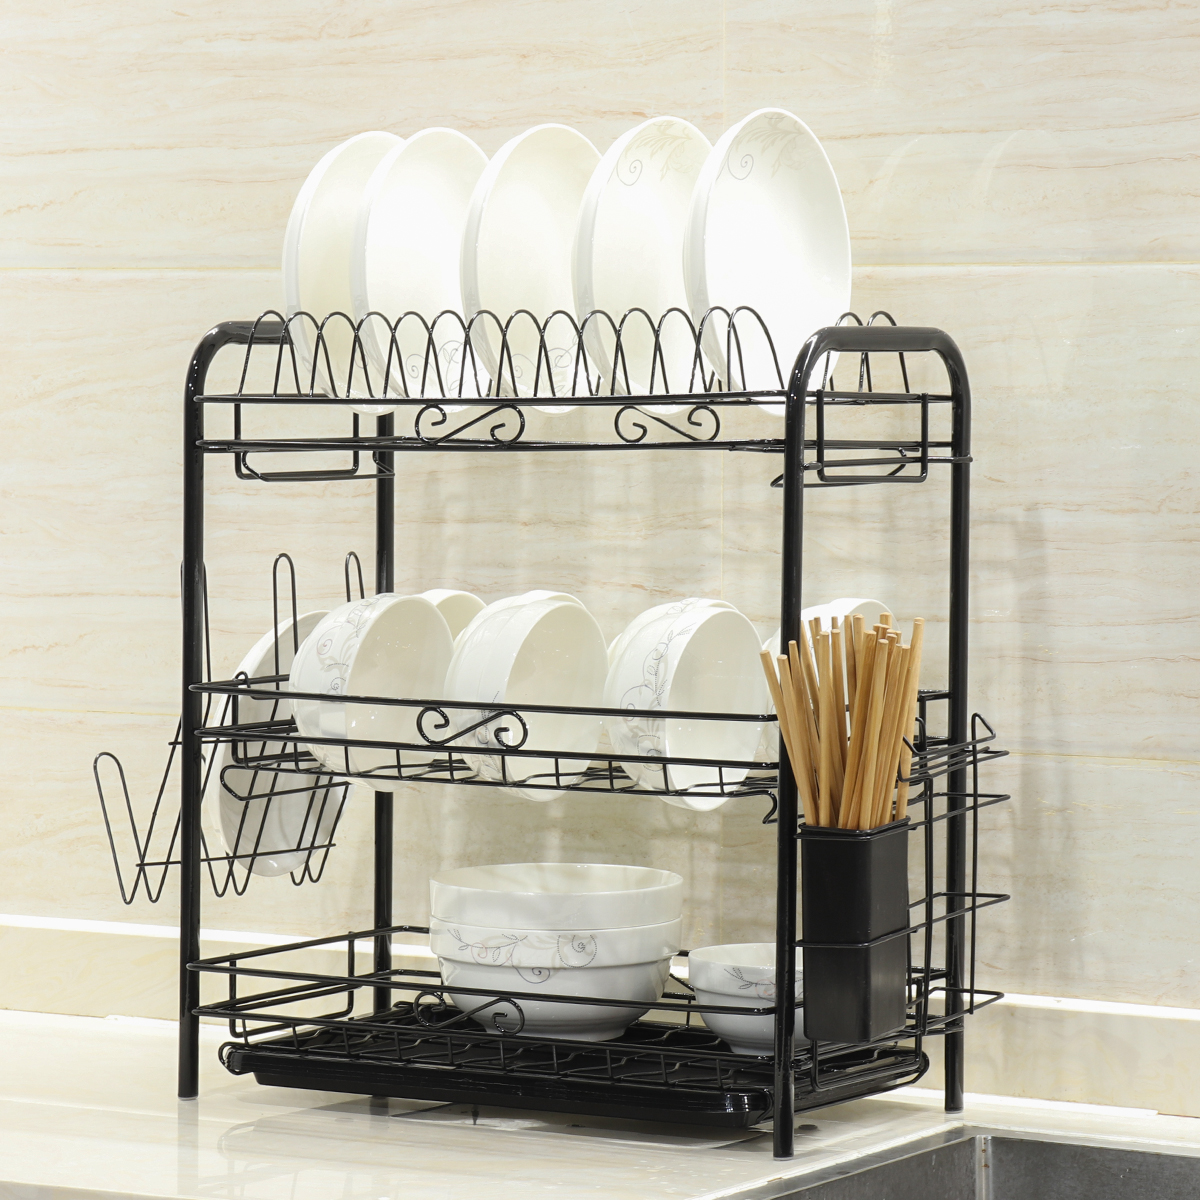 Stainless-Steel-Dish-Rack-Sink-Bowl-Shelf-Nonslip-Cutlery-Holder-Kitchen-Drying-Rack-Organizer-for-K-1764889-10